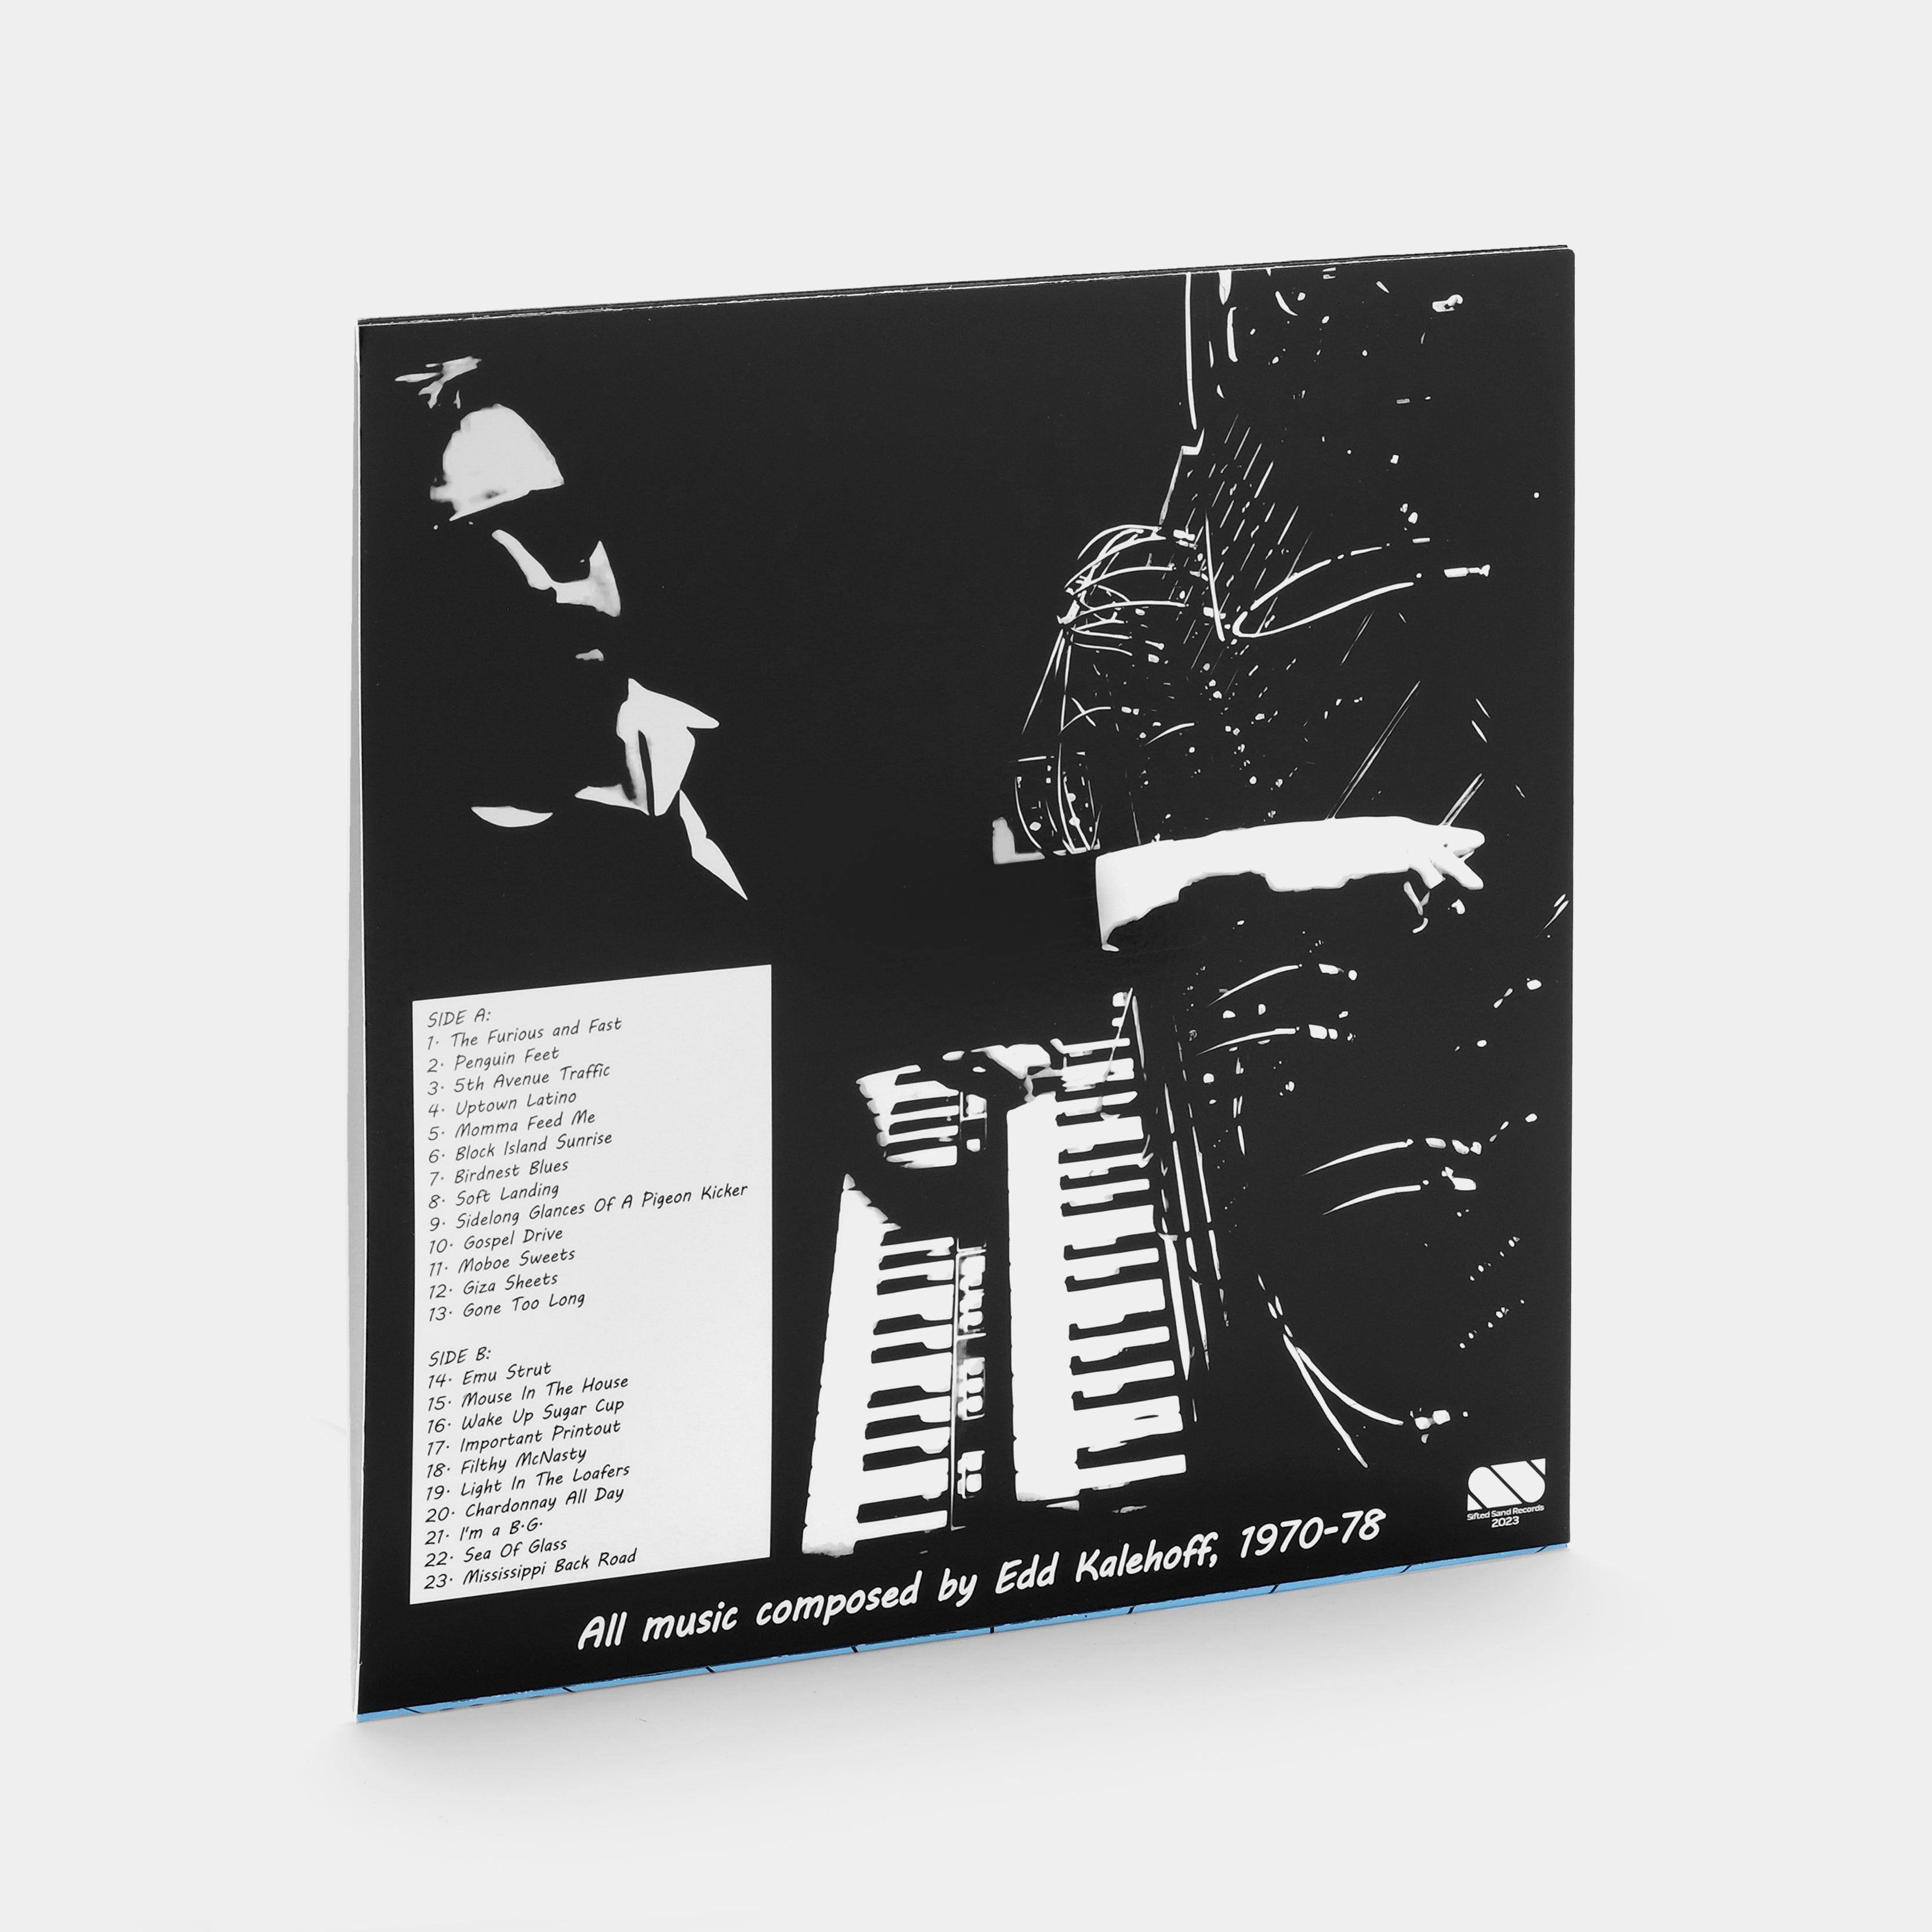 Edd Kalehoff - Moog Grooves LP Vinyl Record